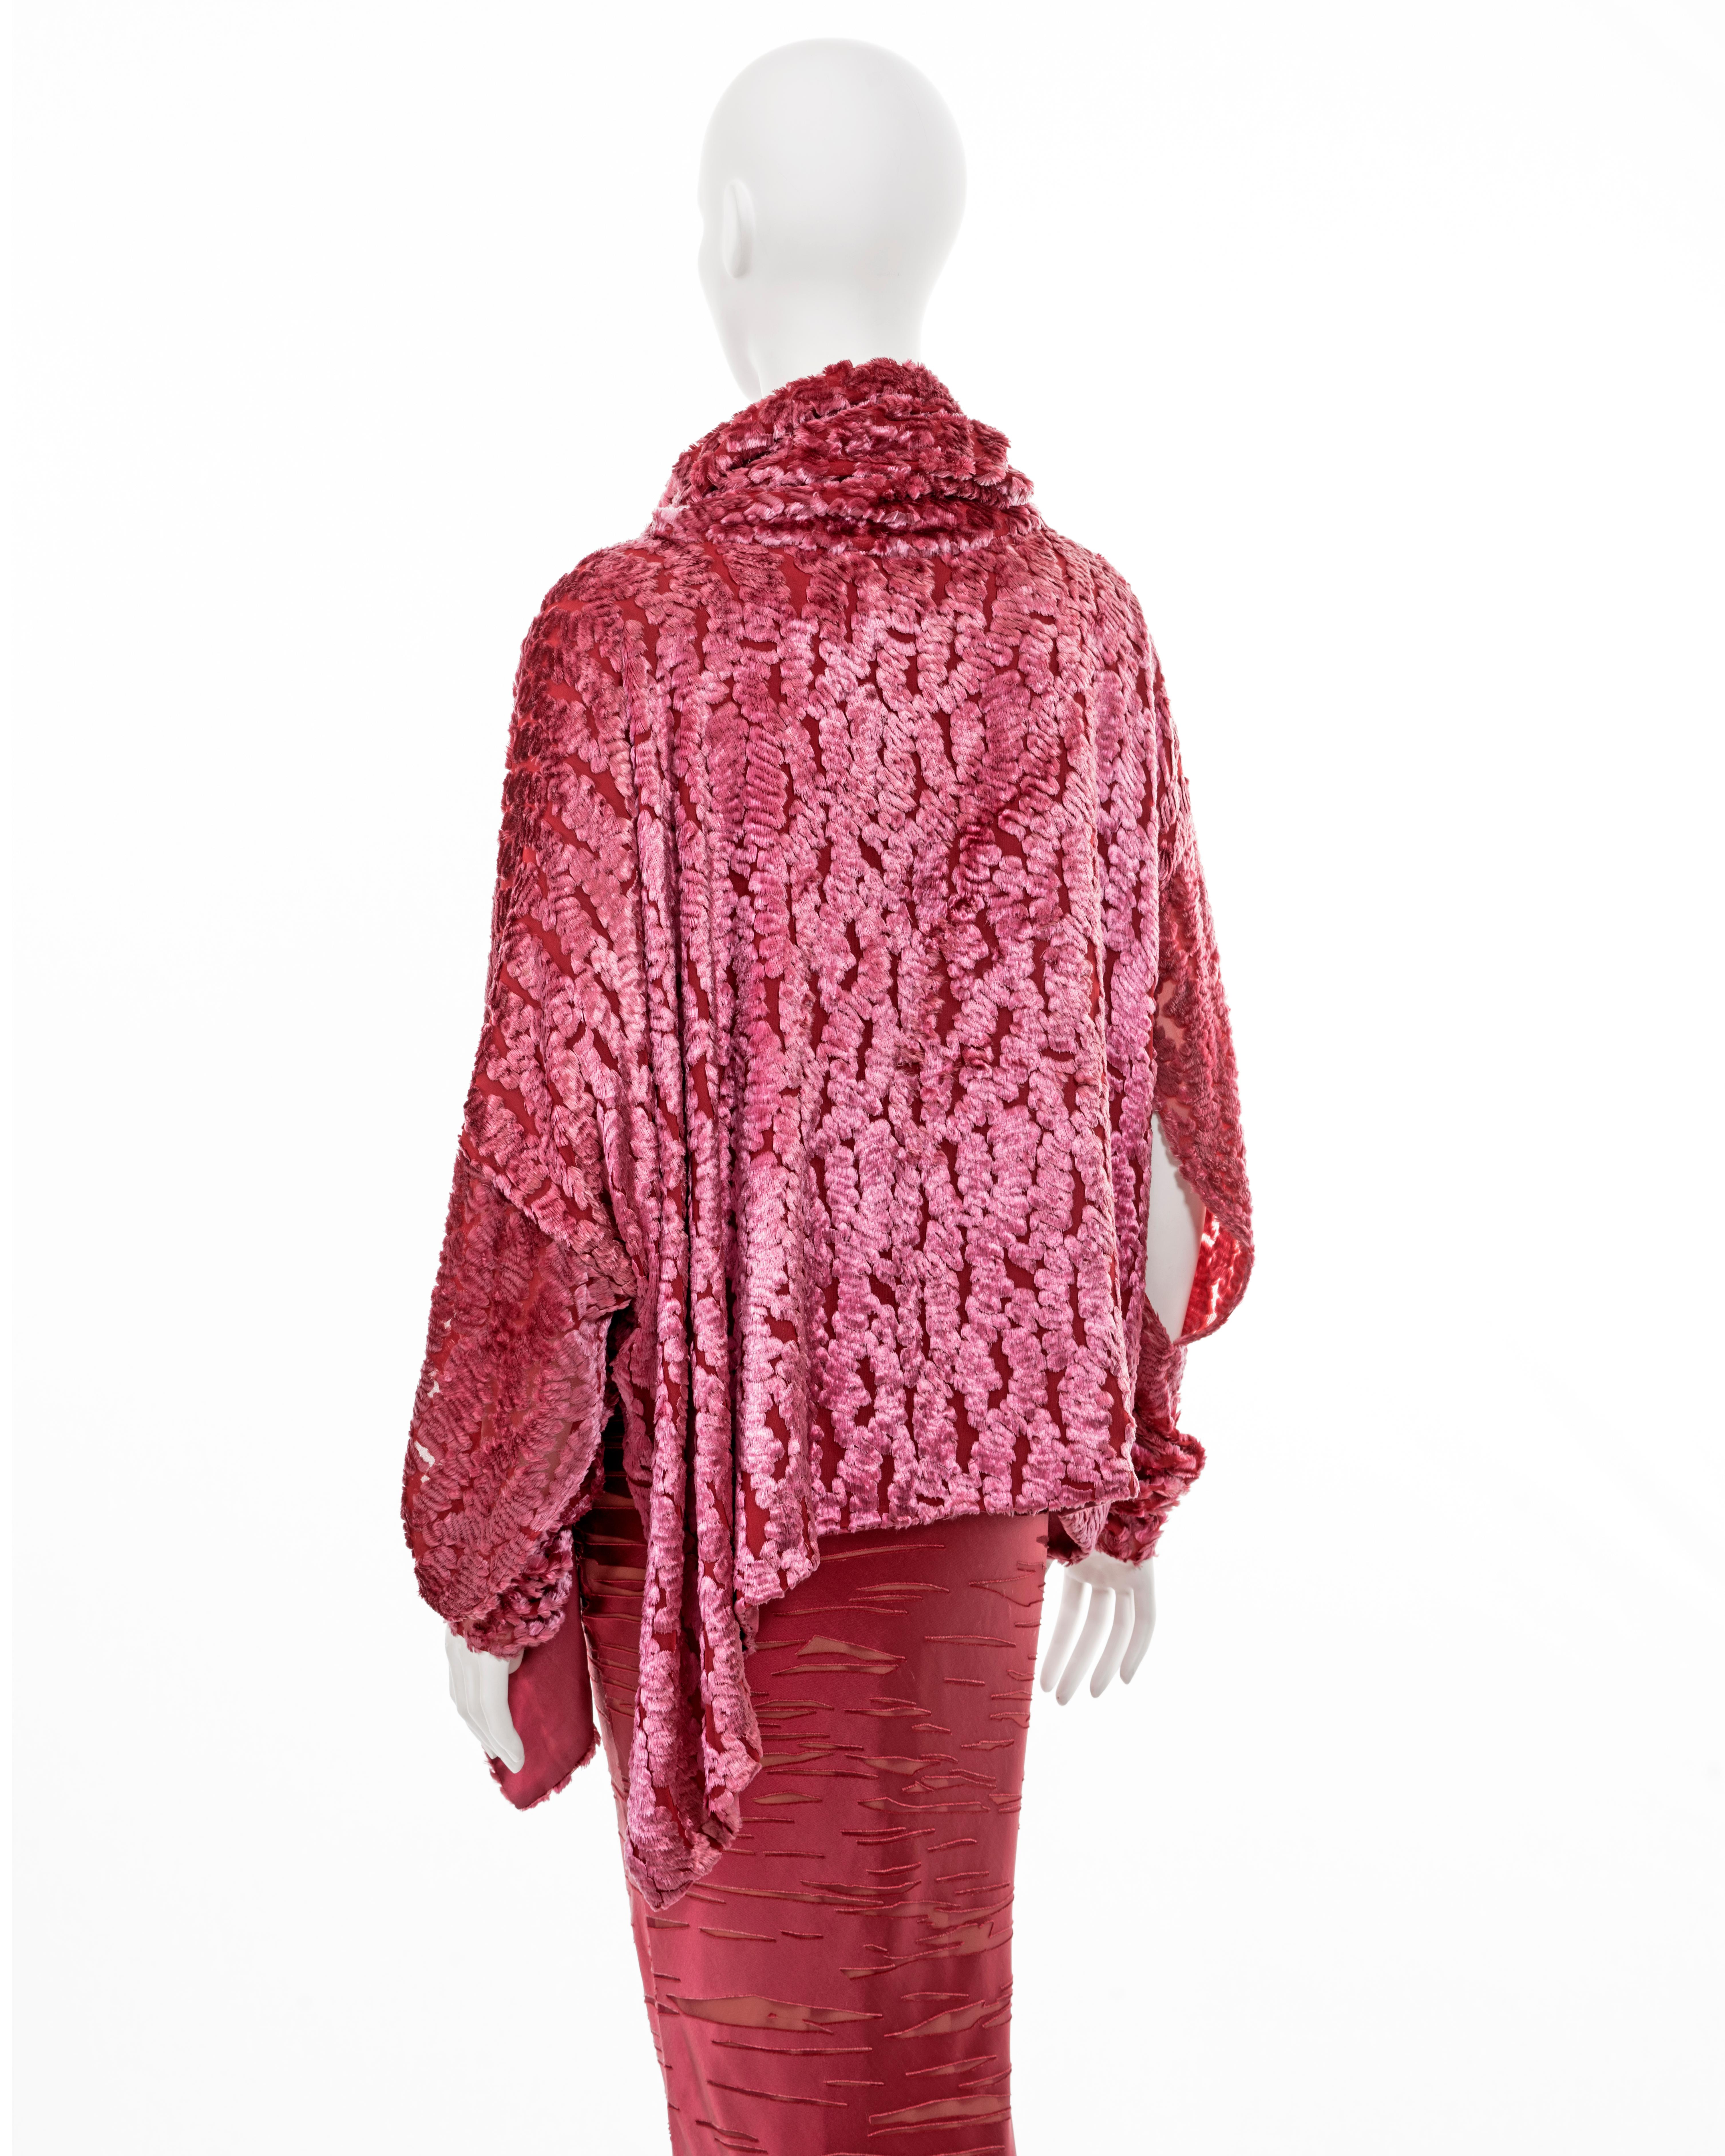 Christian Dior by John Galliano bias cut evening dress and sweater, fw 2000 6